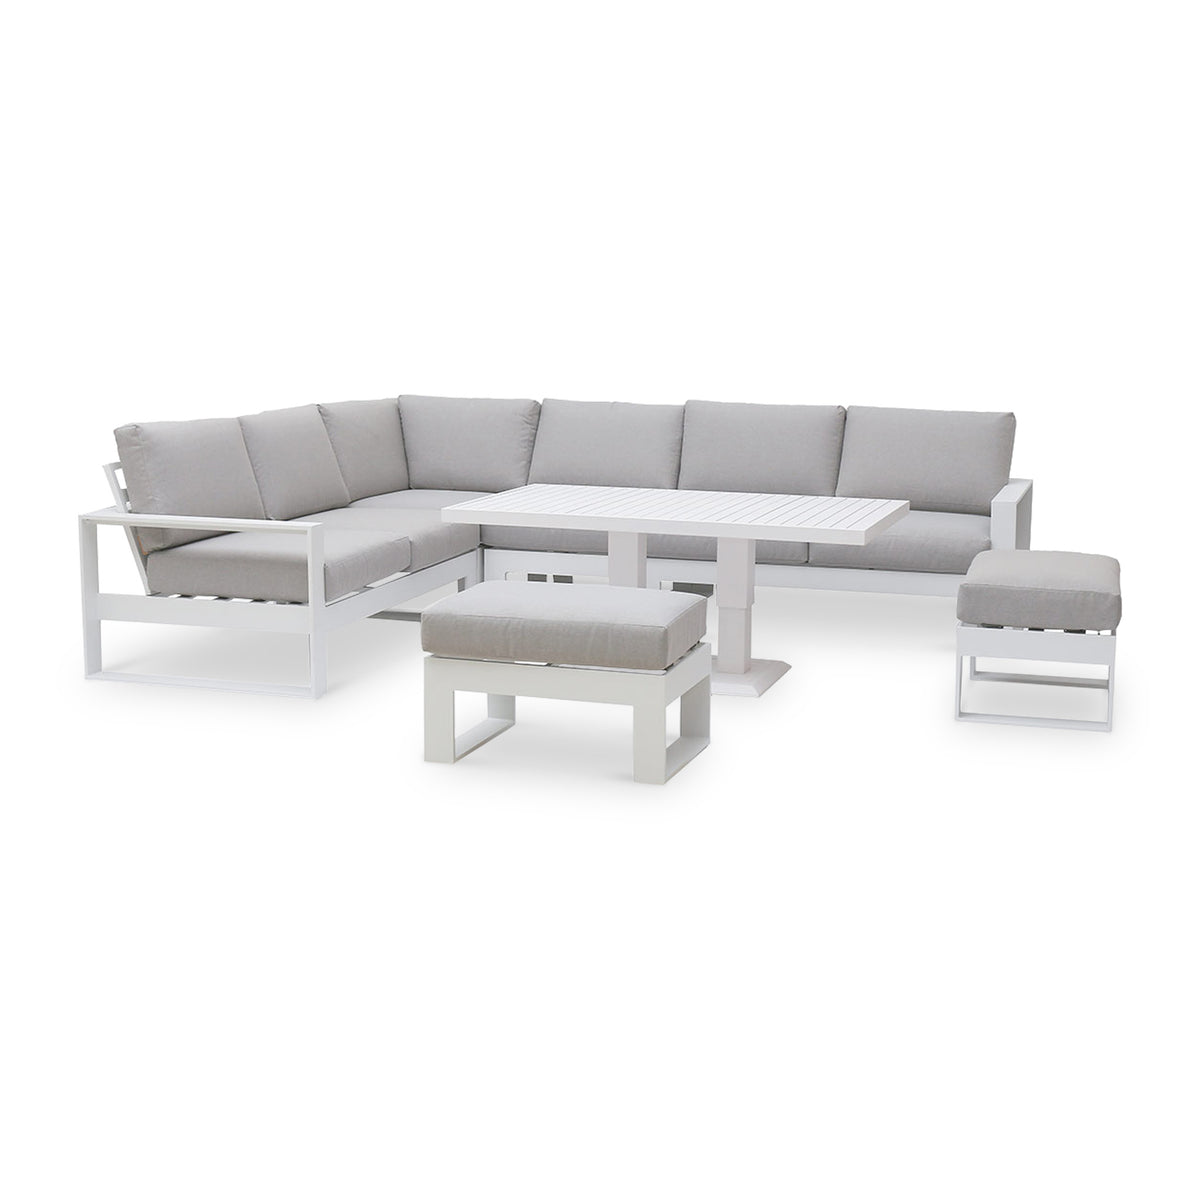 Maze Amalfi White Large Corner Dining Set with Rectangular Rising Table from Roseland Furniture